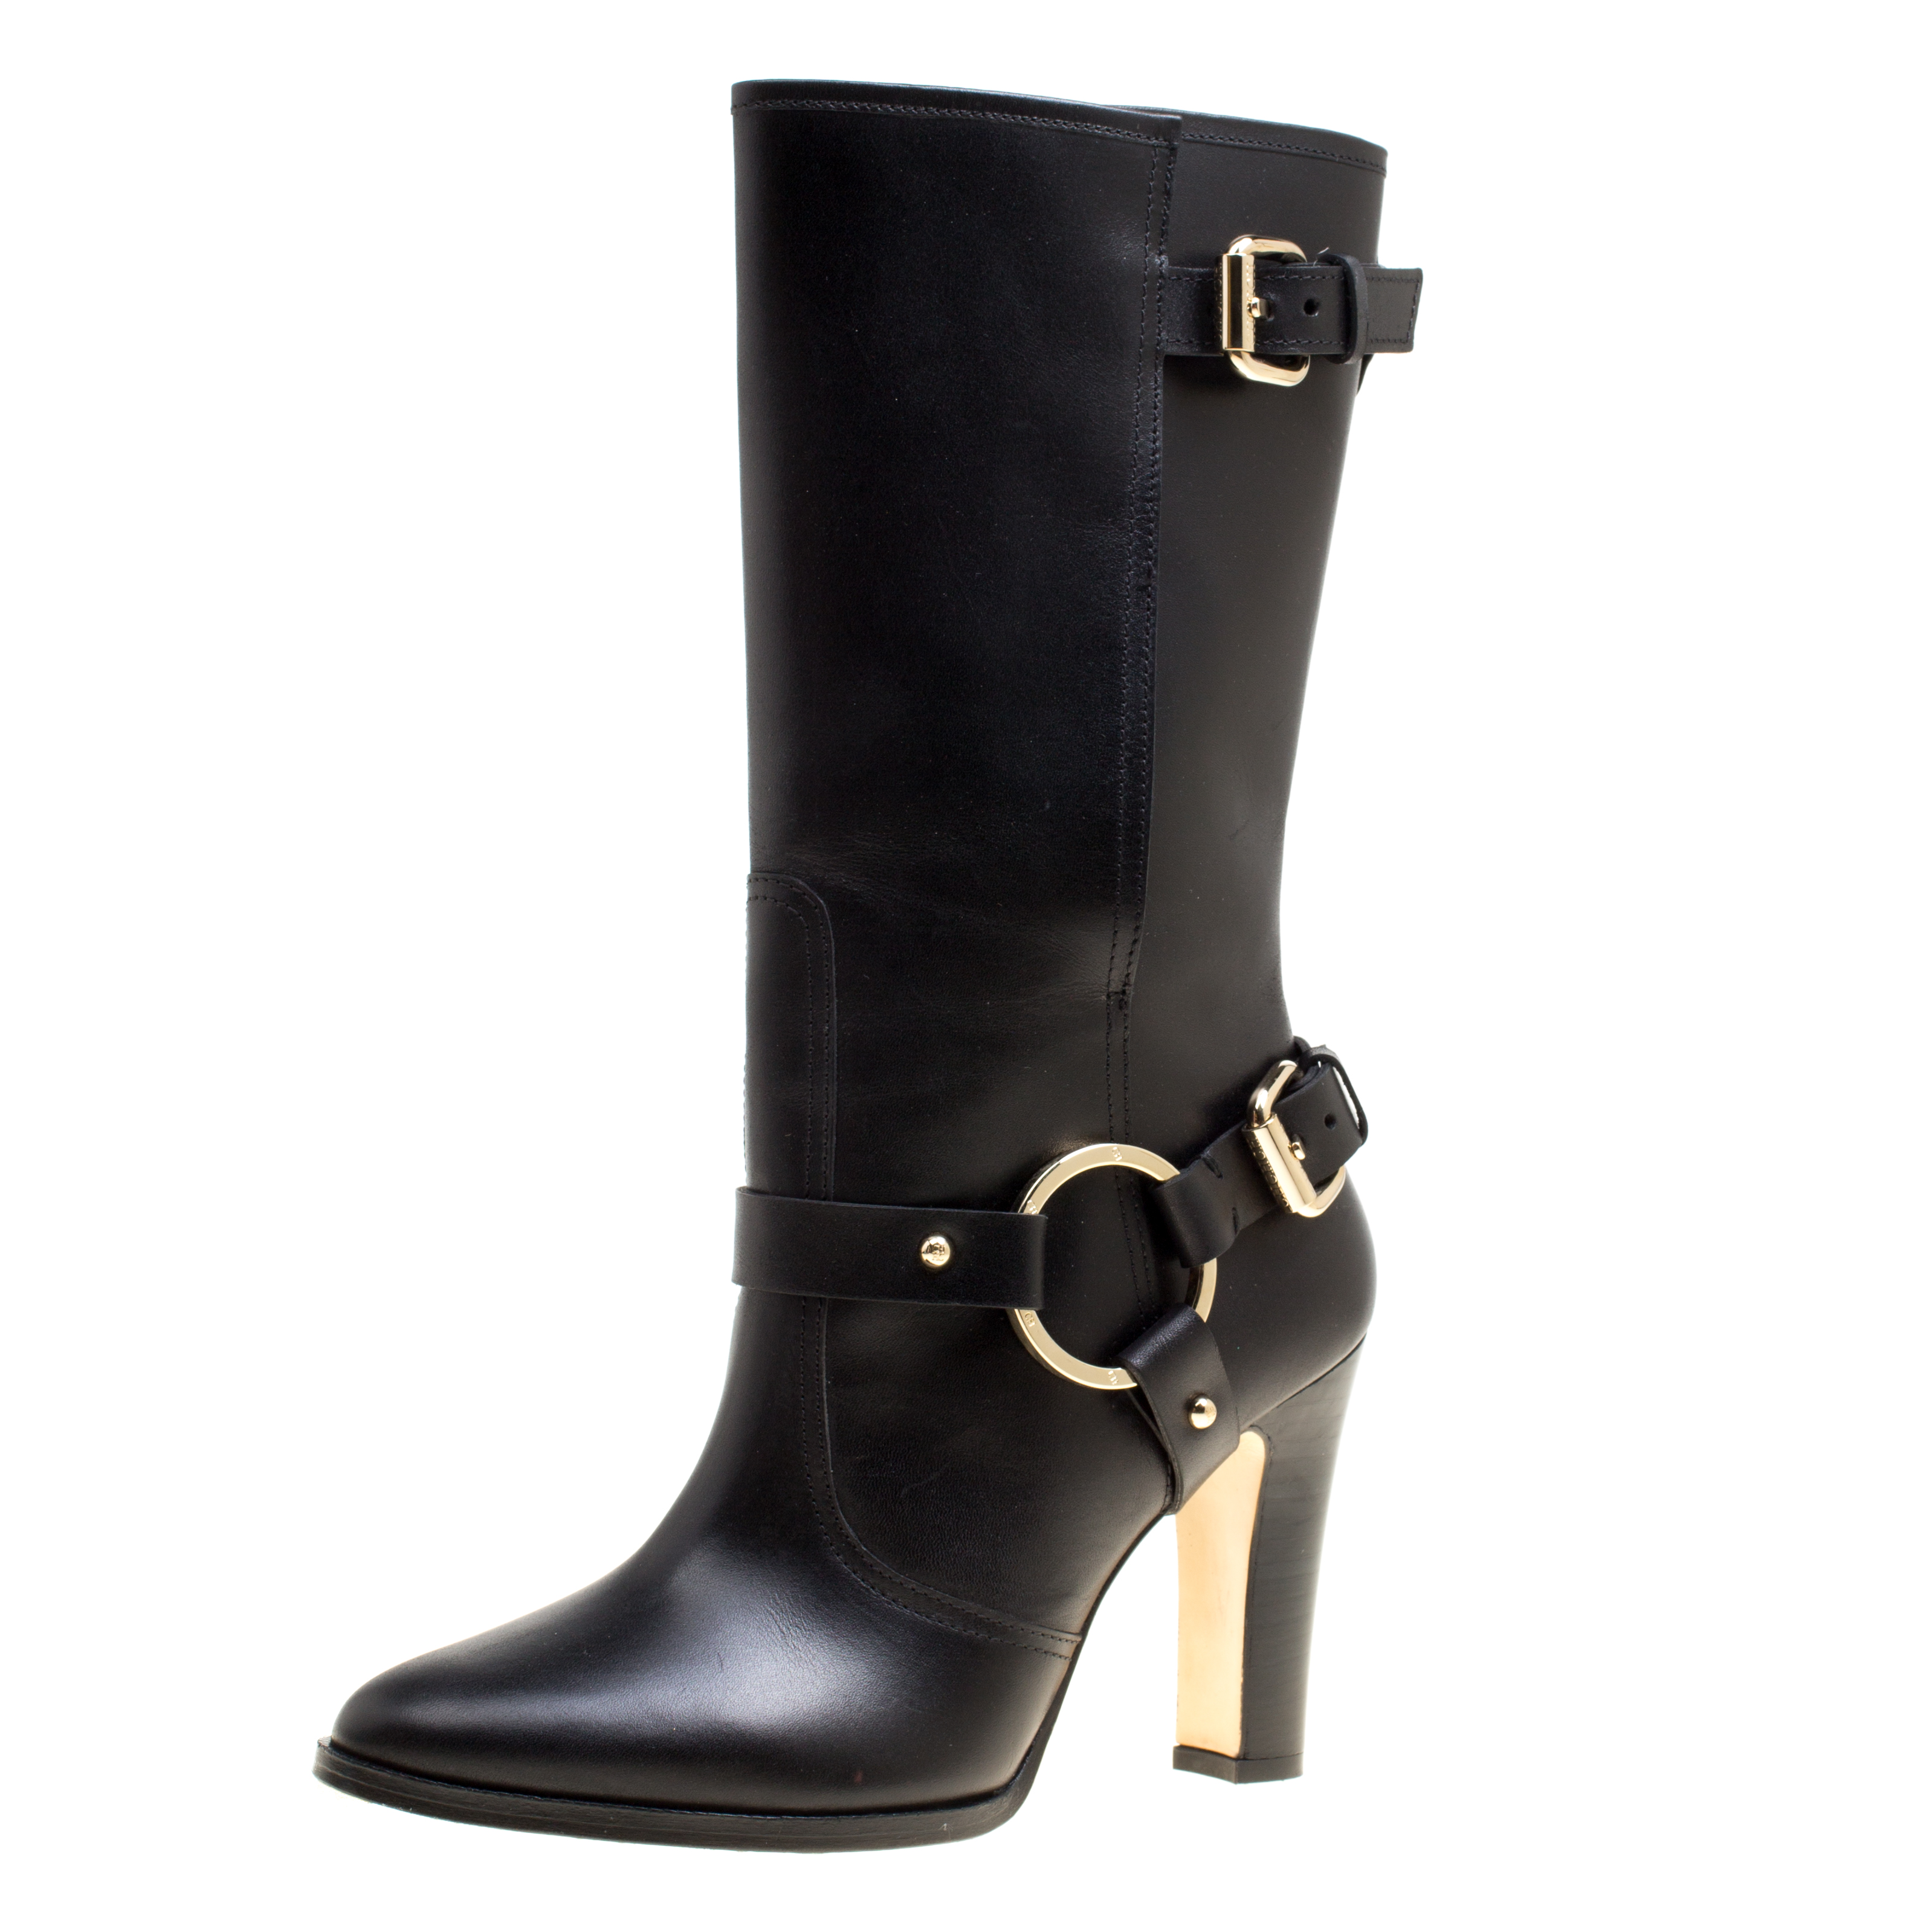 Carolina Herrera Black Leather Calf Length Boots Size 39